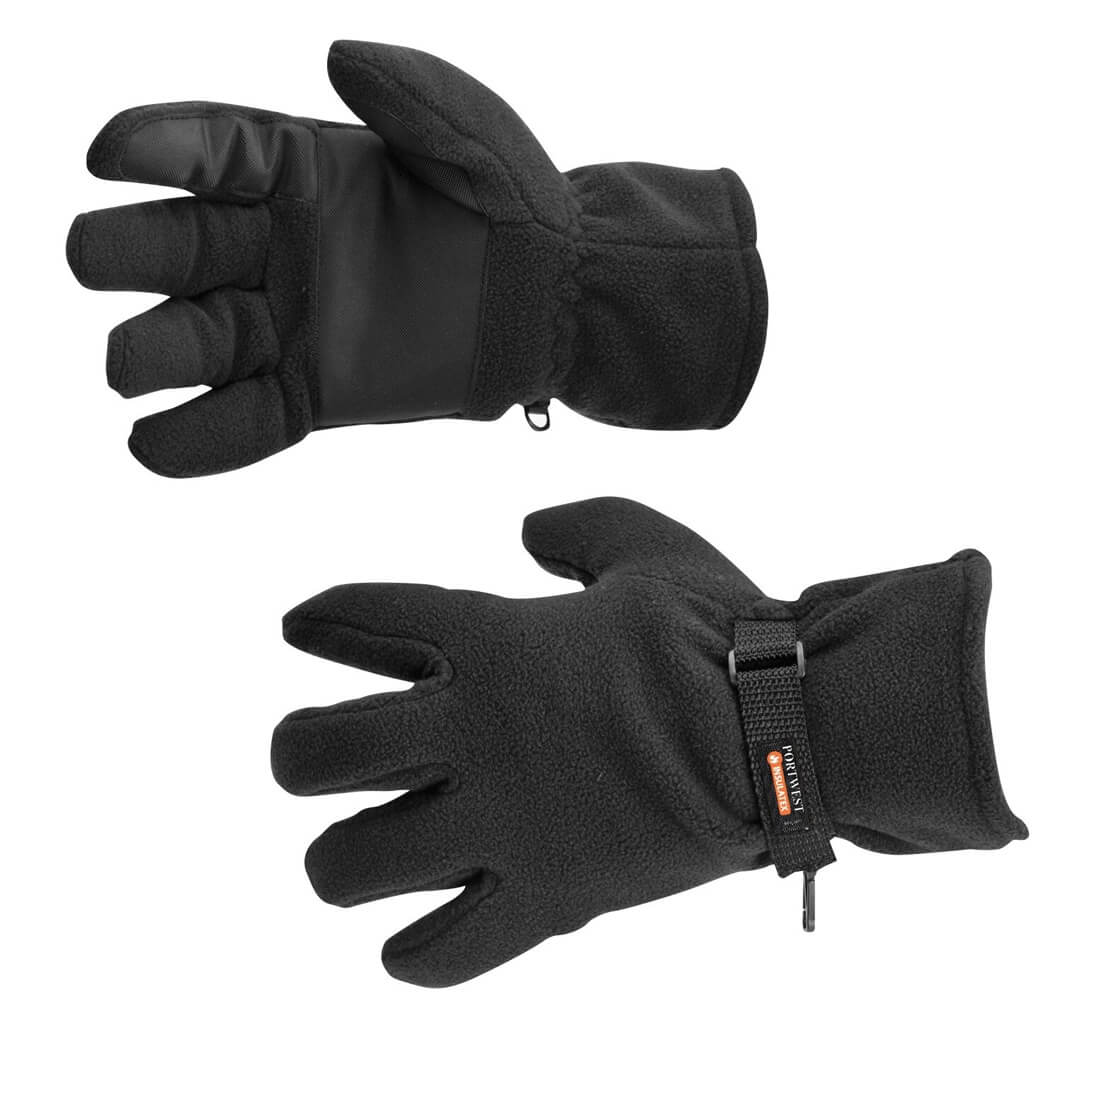 Fleece Glove Insulatex® Lined - Safetywear